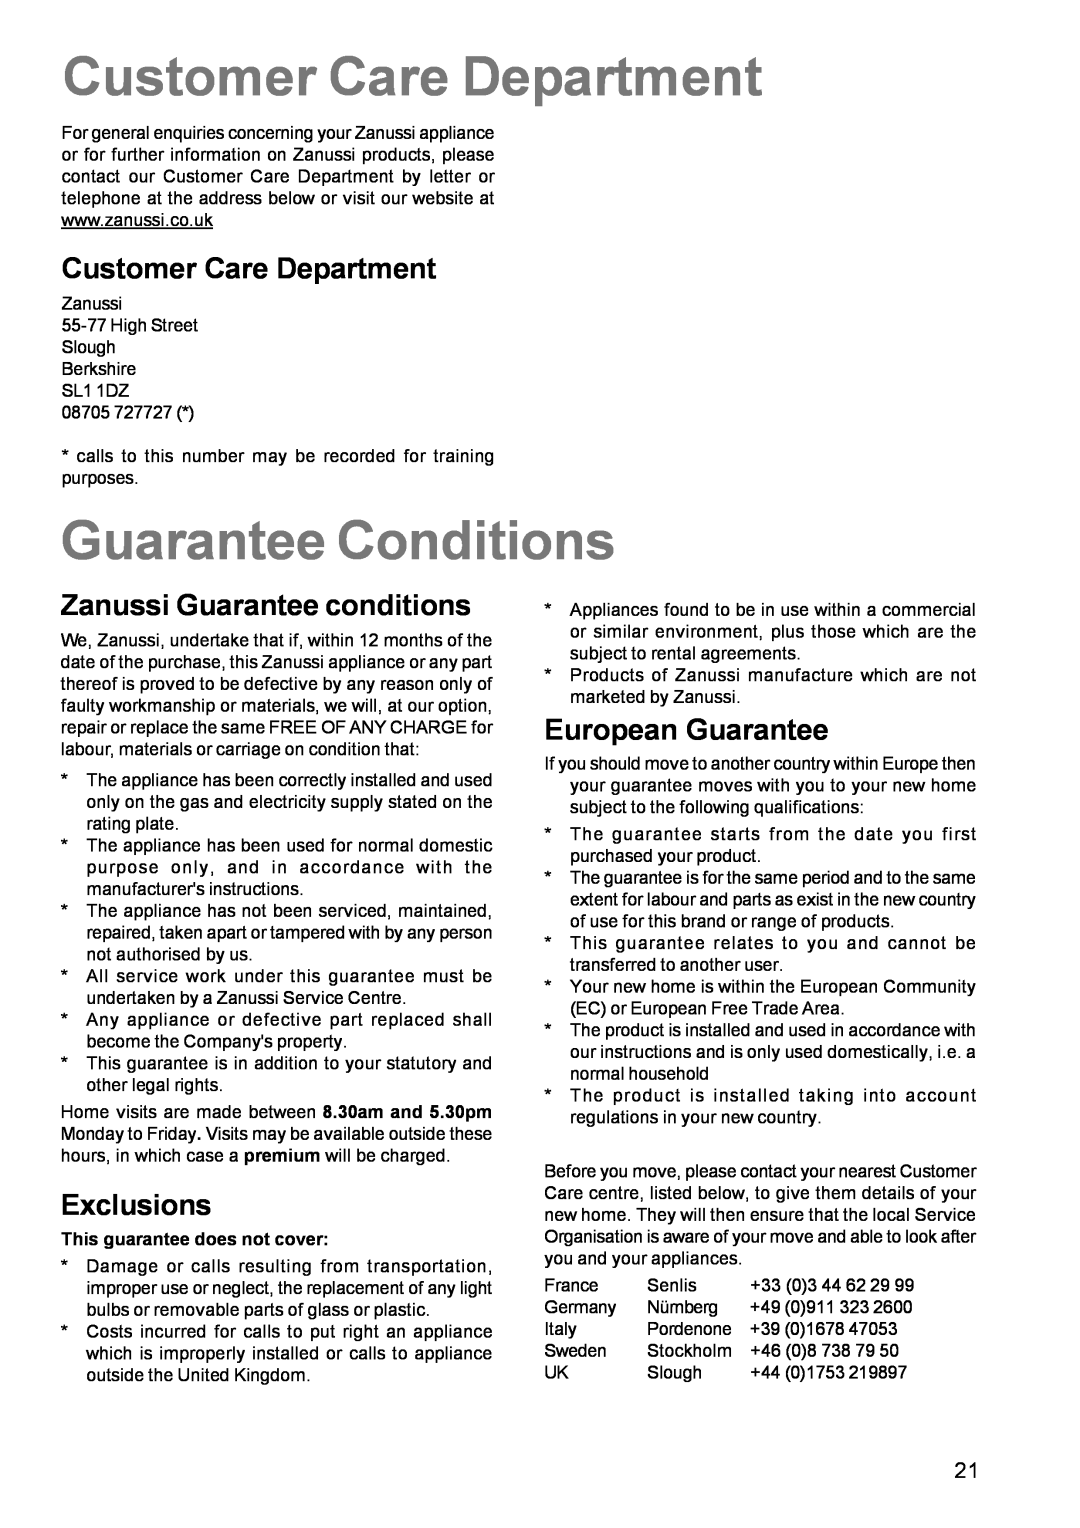 Zanussi ZCE 700 manual Customer Care Department, Guarantee Conditions, Zanussi Guarantee conditions, Exclusions 